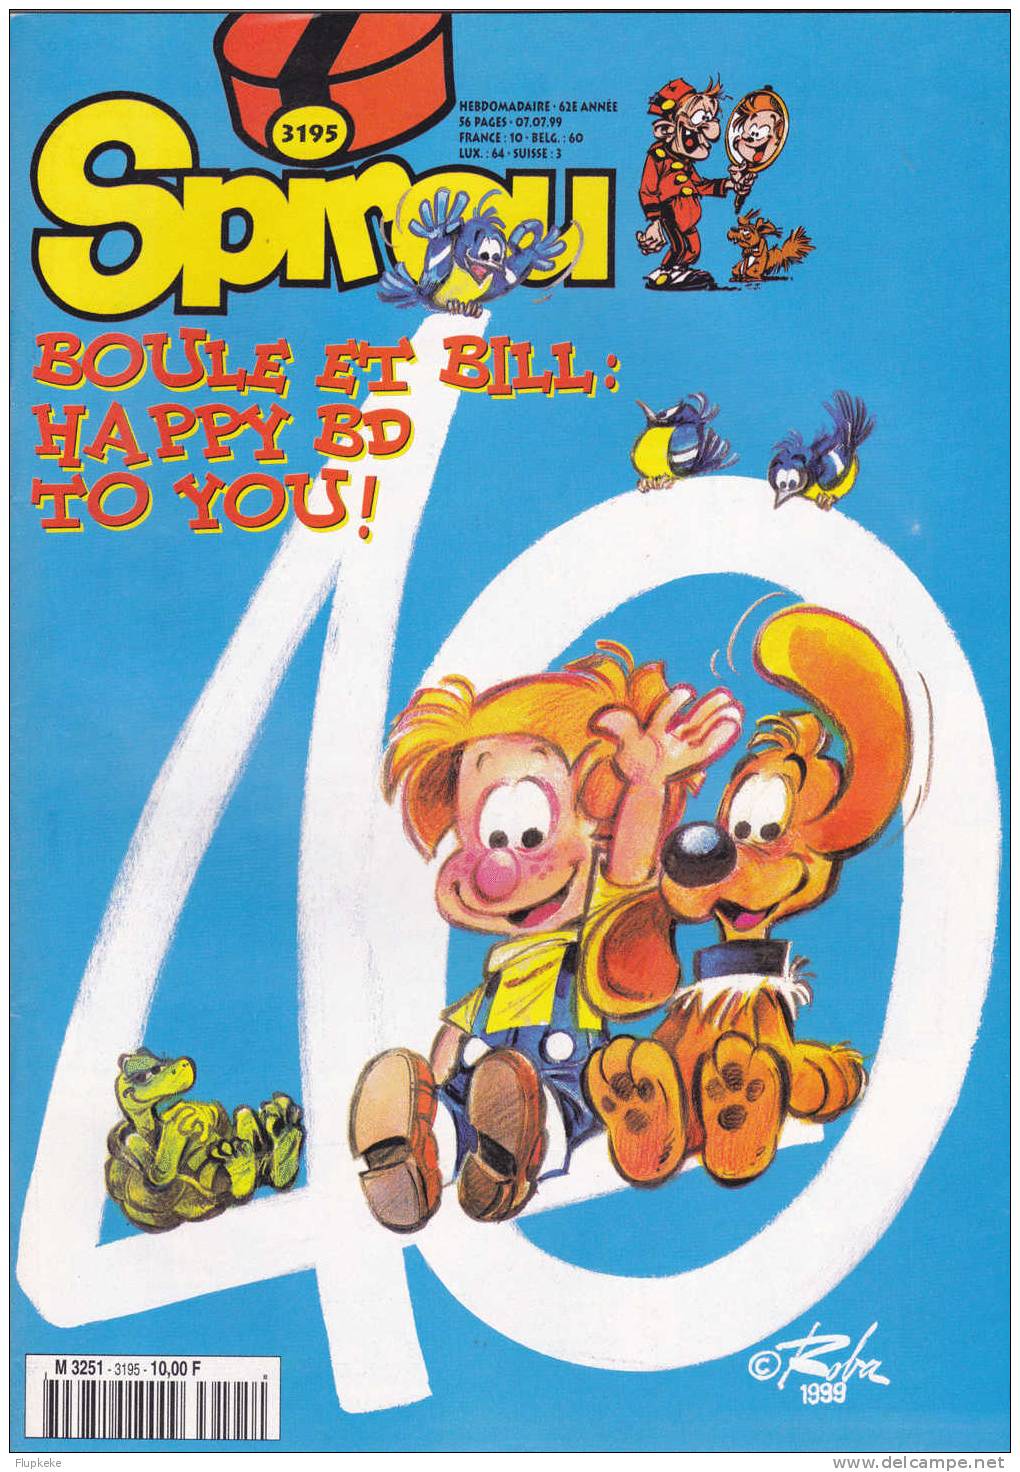 Spirou 3195 Juillet 1999 Boule Et Bill 40 Ans Happy Bd To You ! - Spirou Magazine